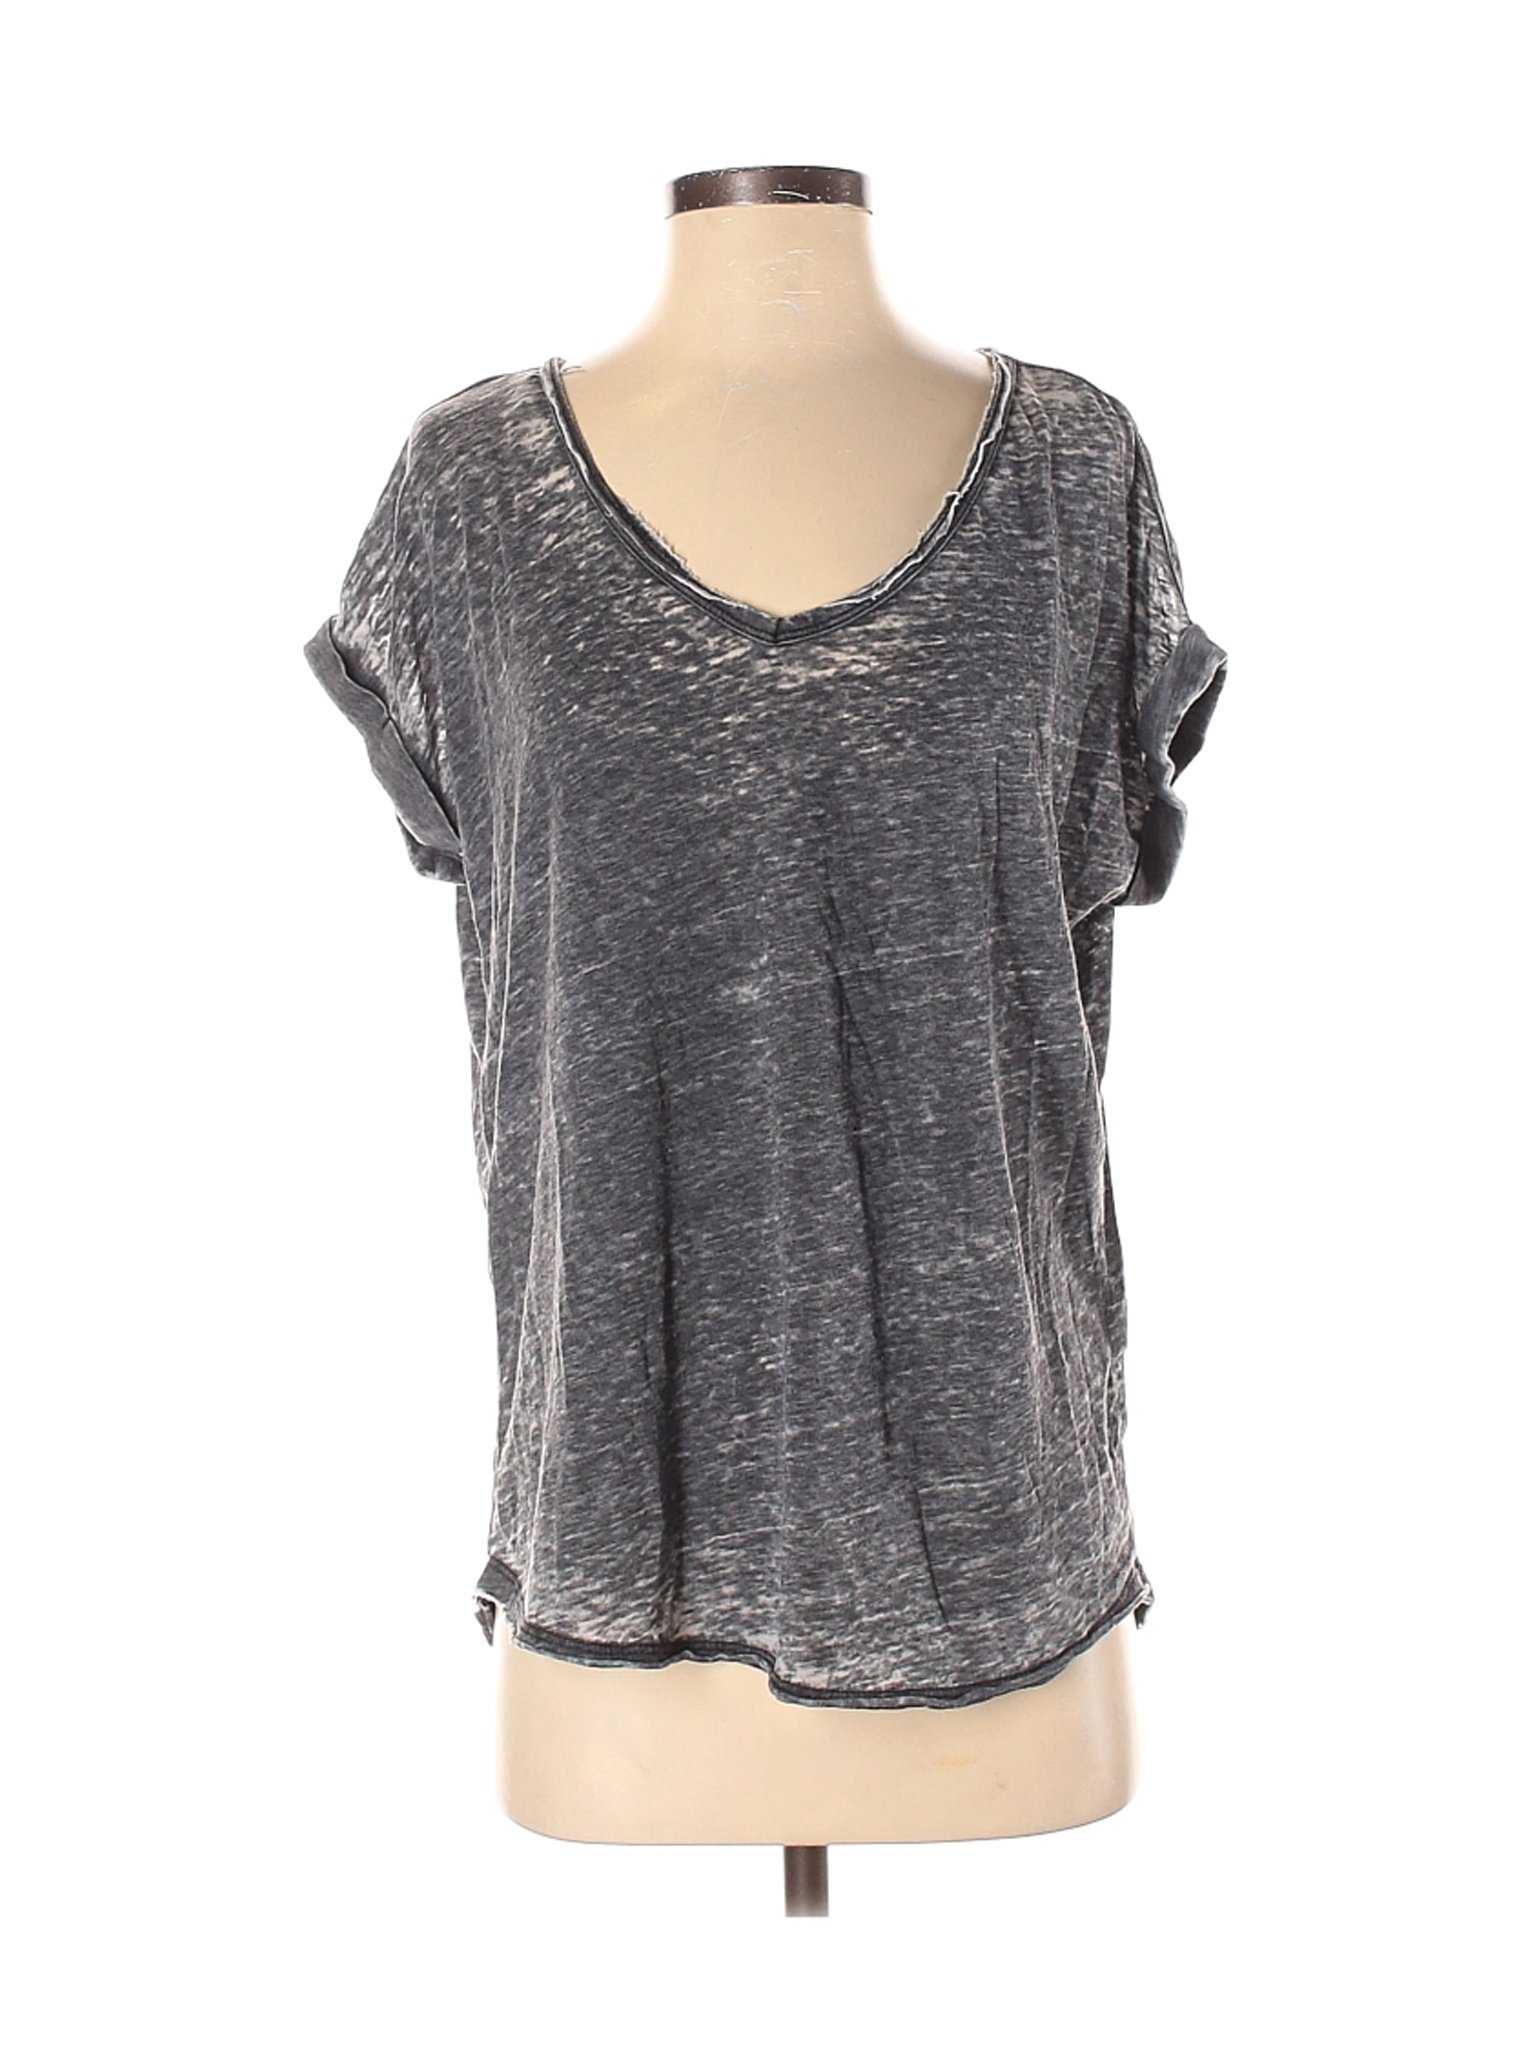 Charlotte Russe Women Gray Short Sleeve T-Shirt S | eBay